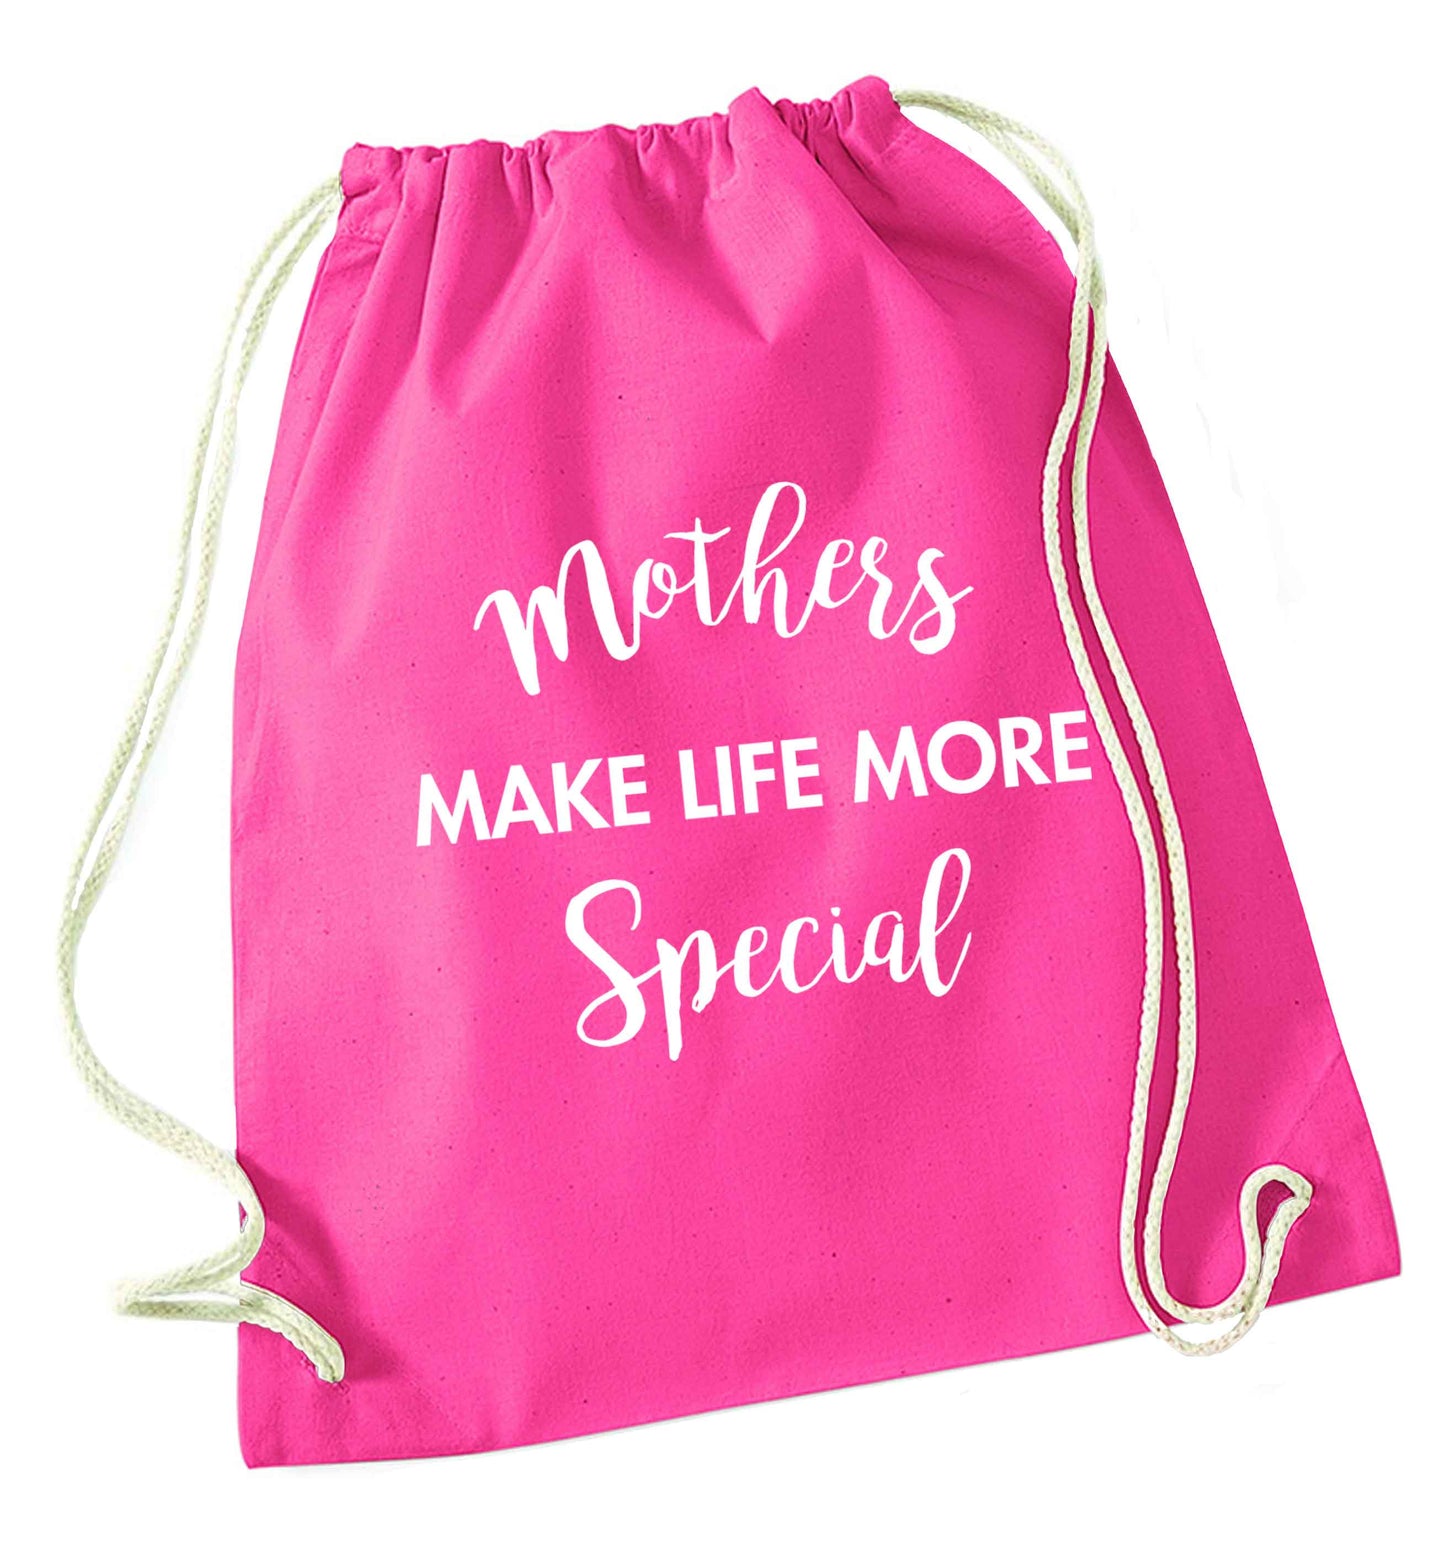 Mother's make life more special pink drawstring bag